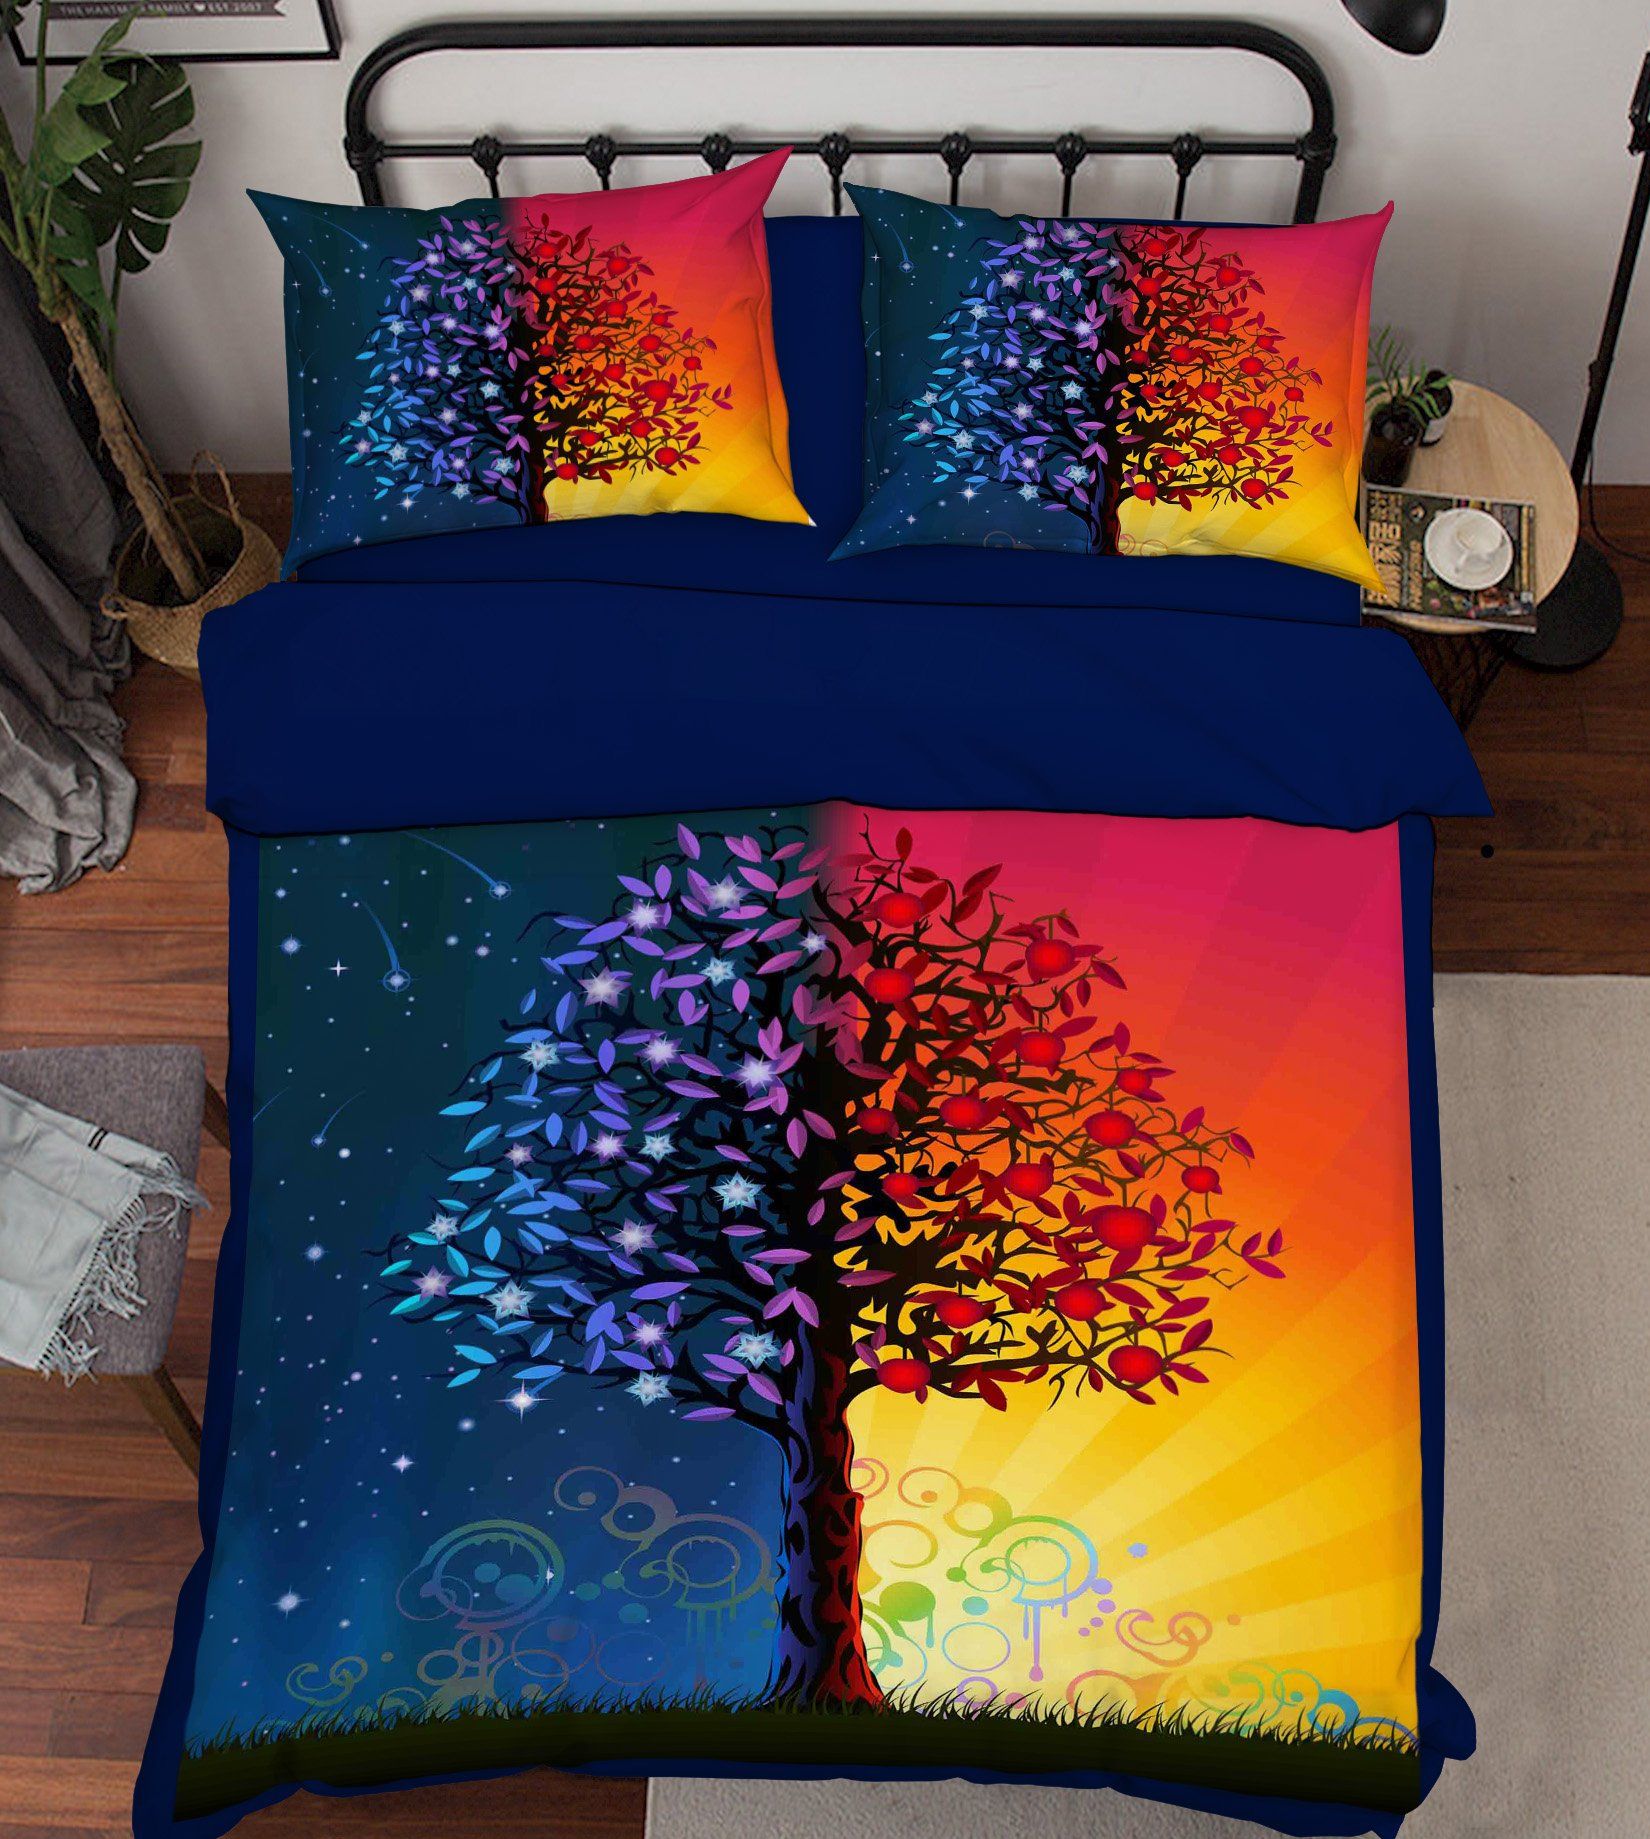 3D Yin Yang Tree 113 Bed Pillowcases Quilt Wallpaper AJ Wallpaper 